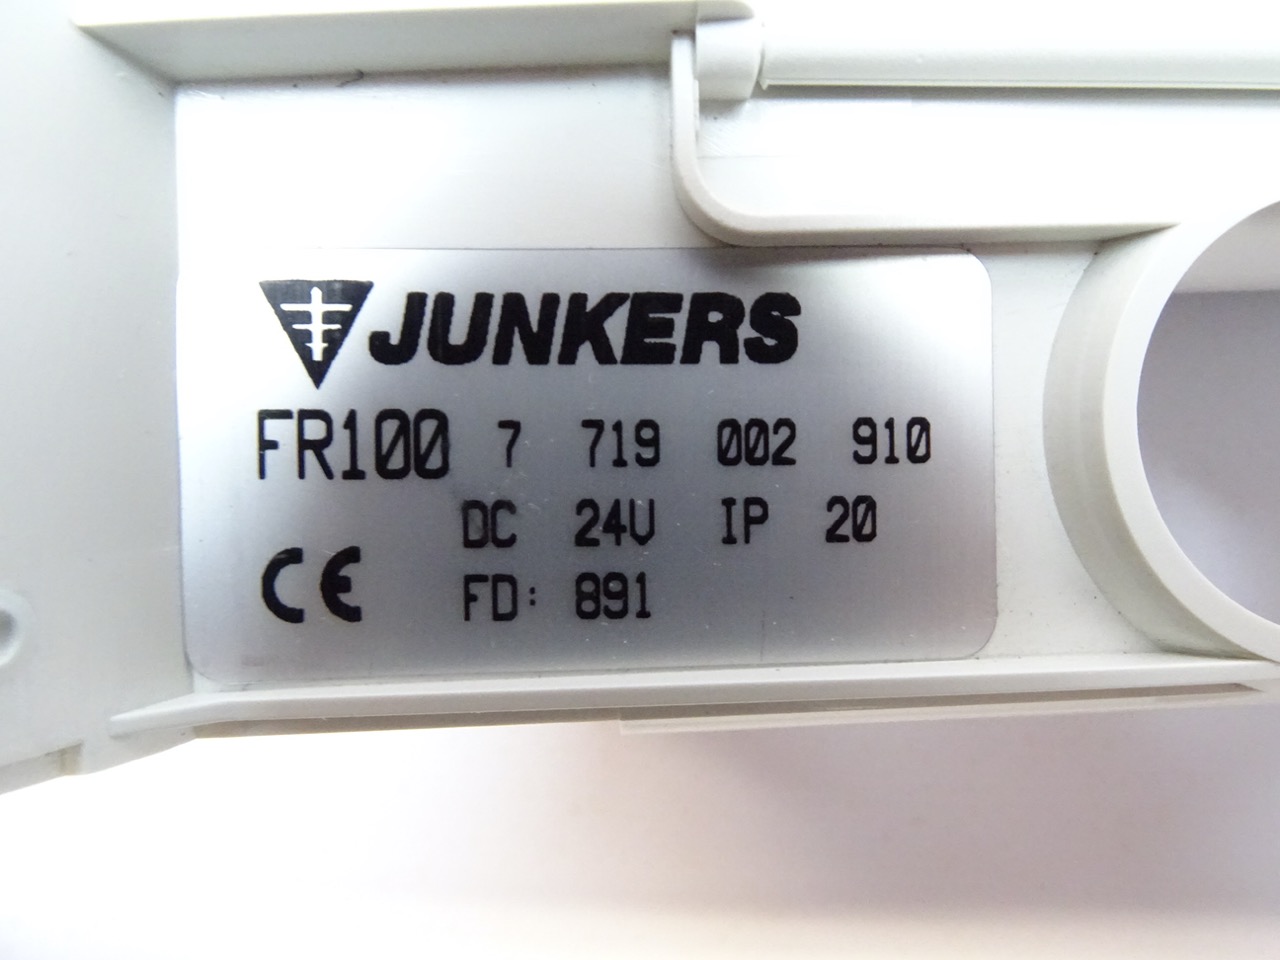 Junkers Bosch FR100 Raumtemperaturregler Thermostat Steuerung